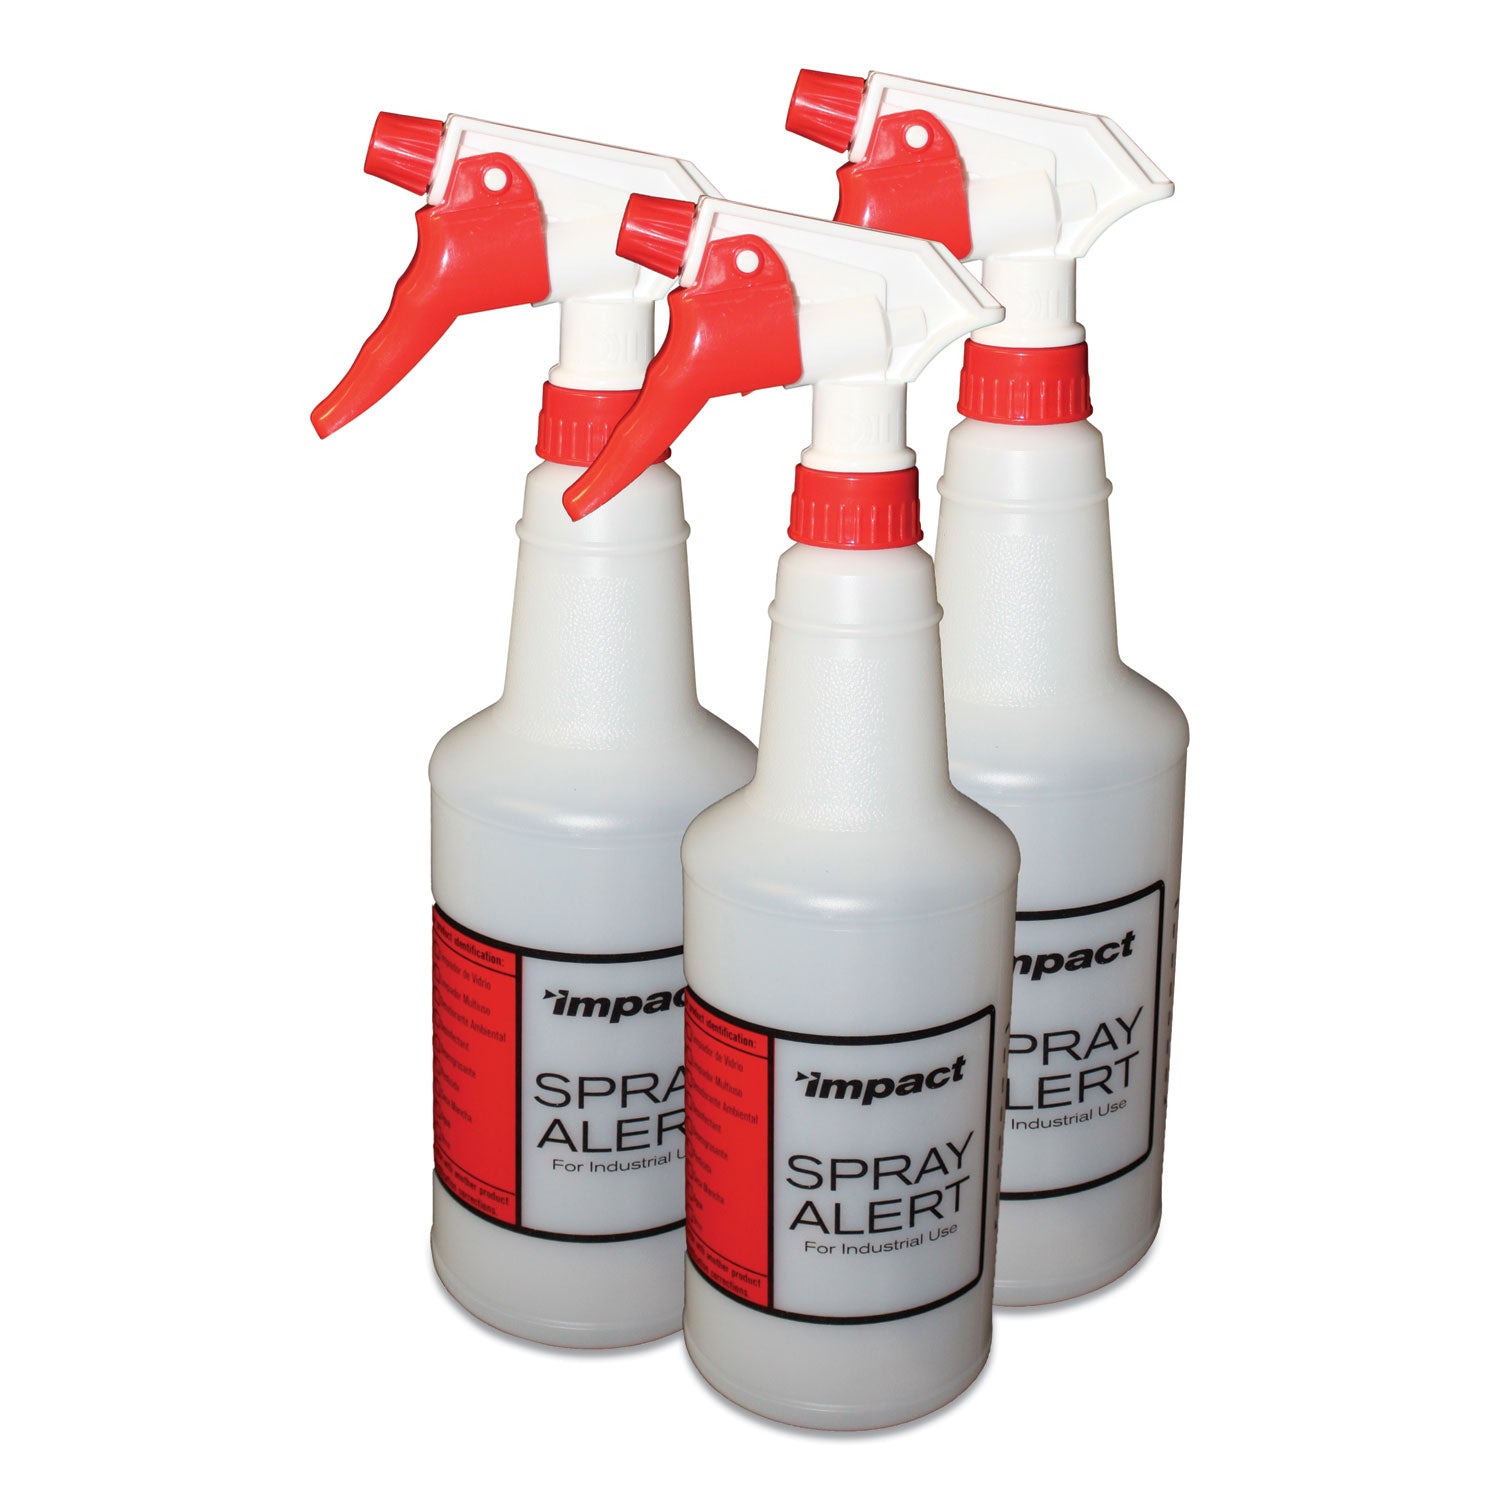 Spray Alert System, 24 oz, Natural with Red/White Sprayer, 3/Pack, 32 Packs/Carton - 1